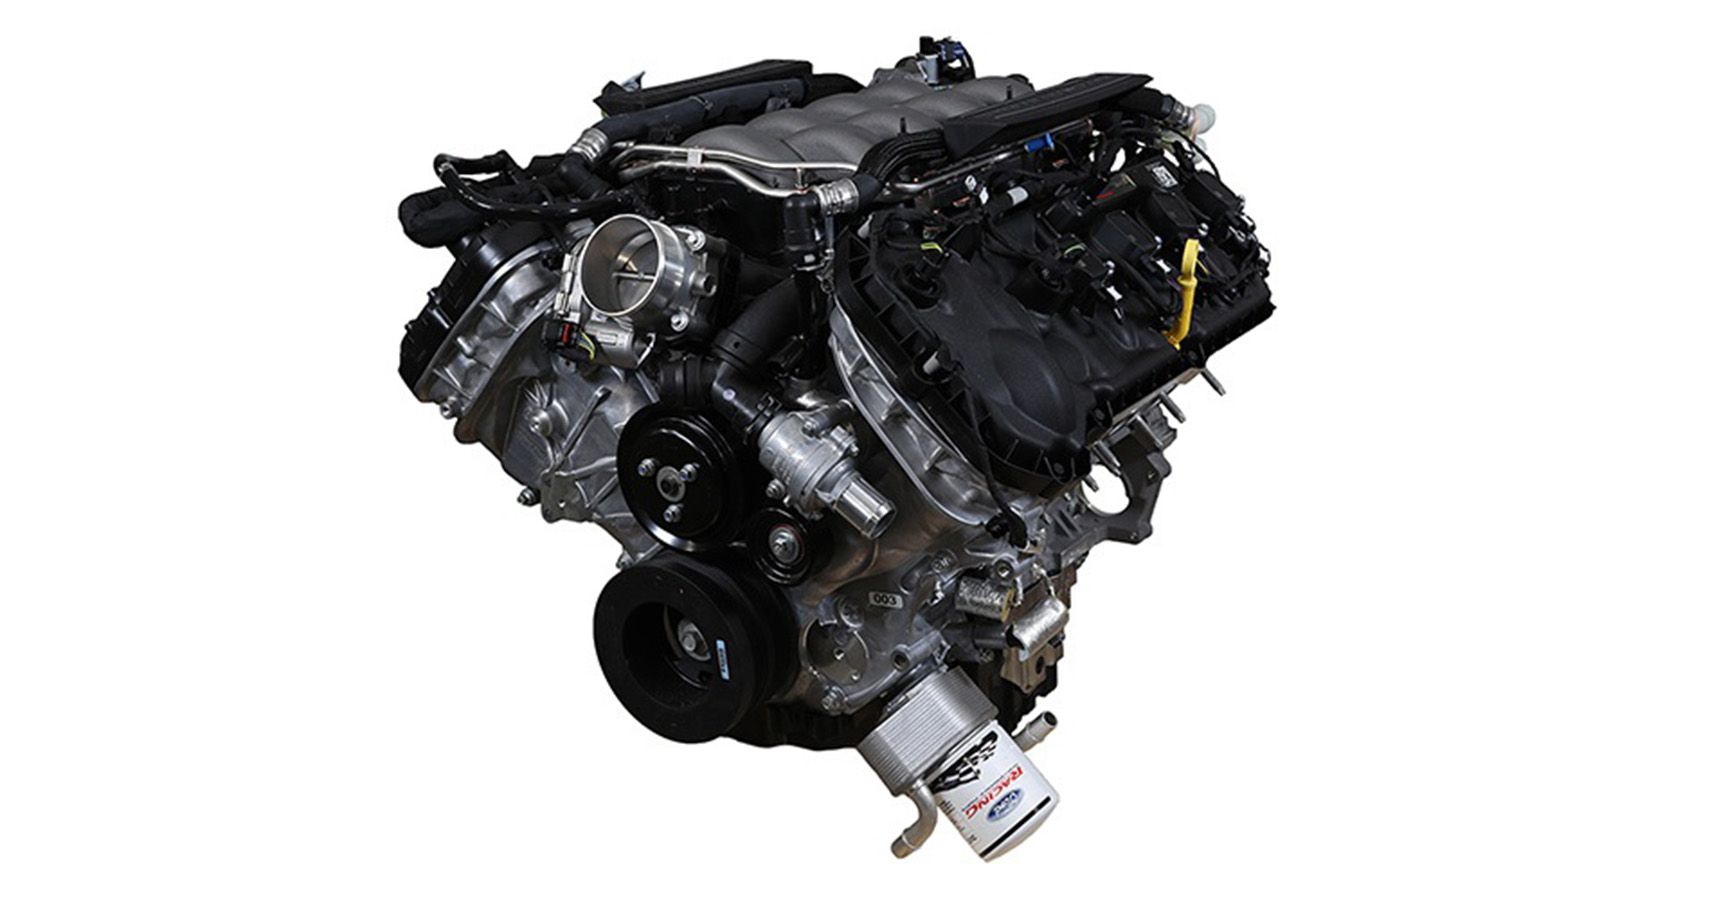 Ford Performance Aluminator crate engine